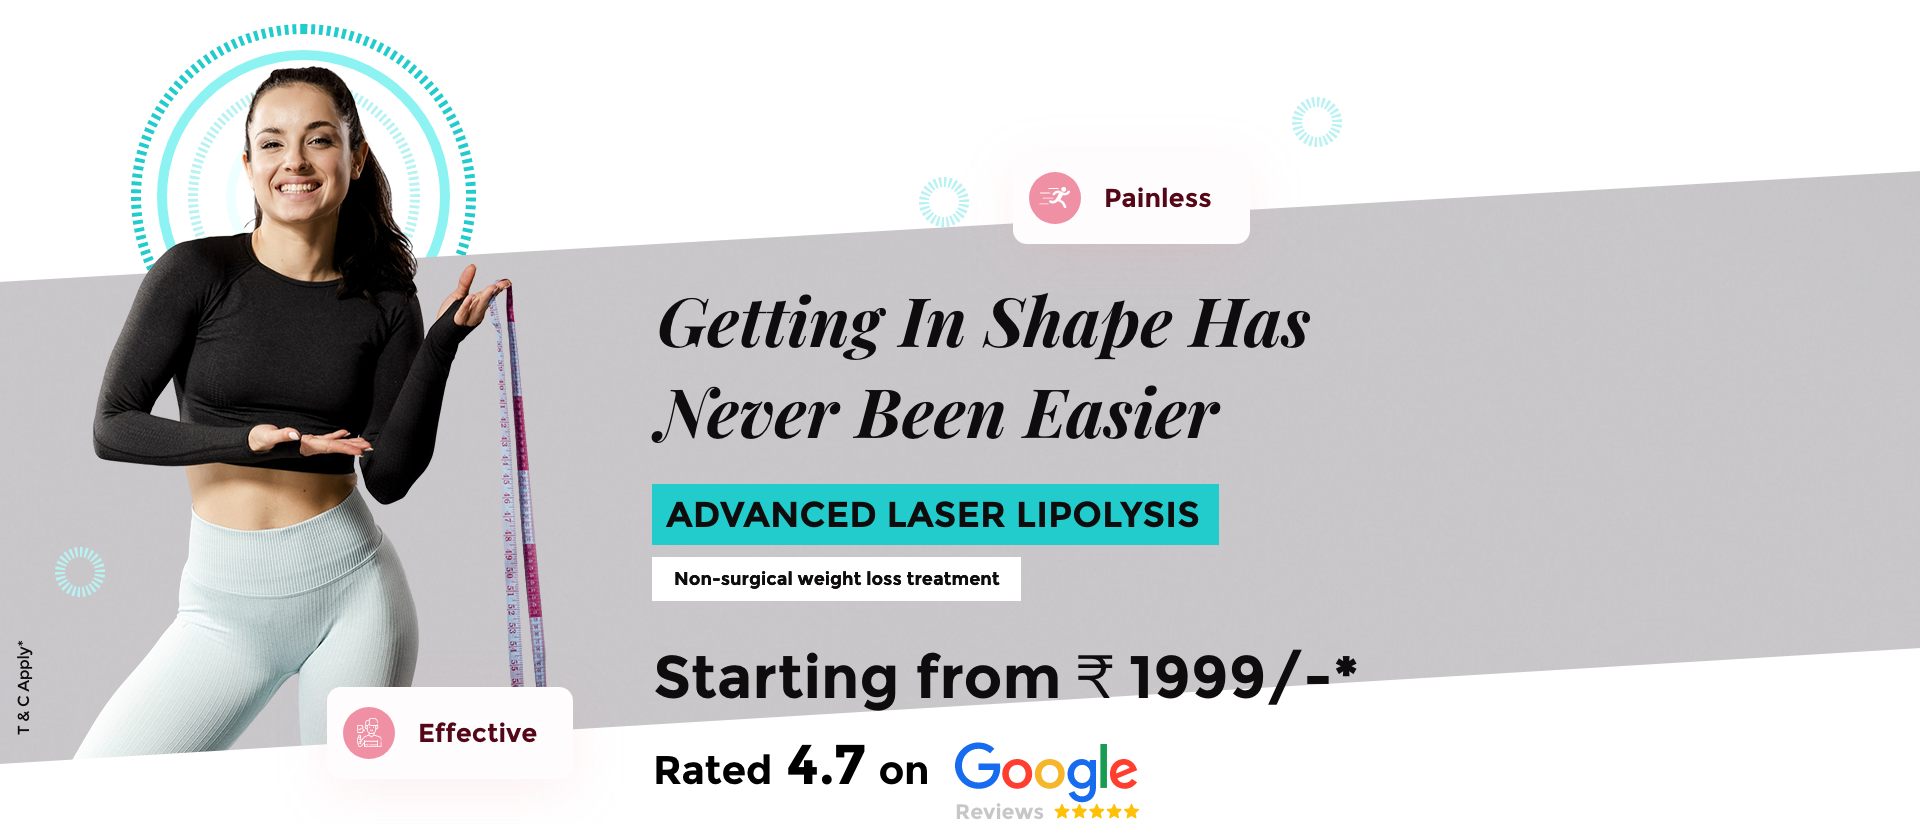 Advance Laser Lipolysis